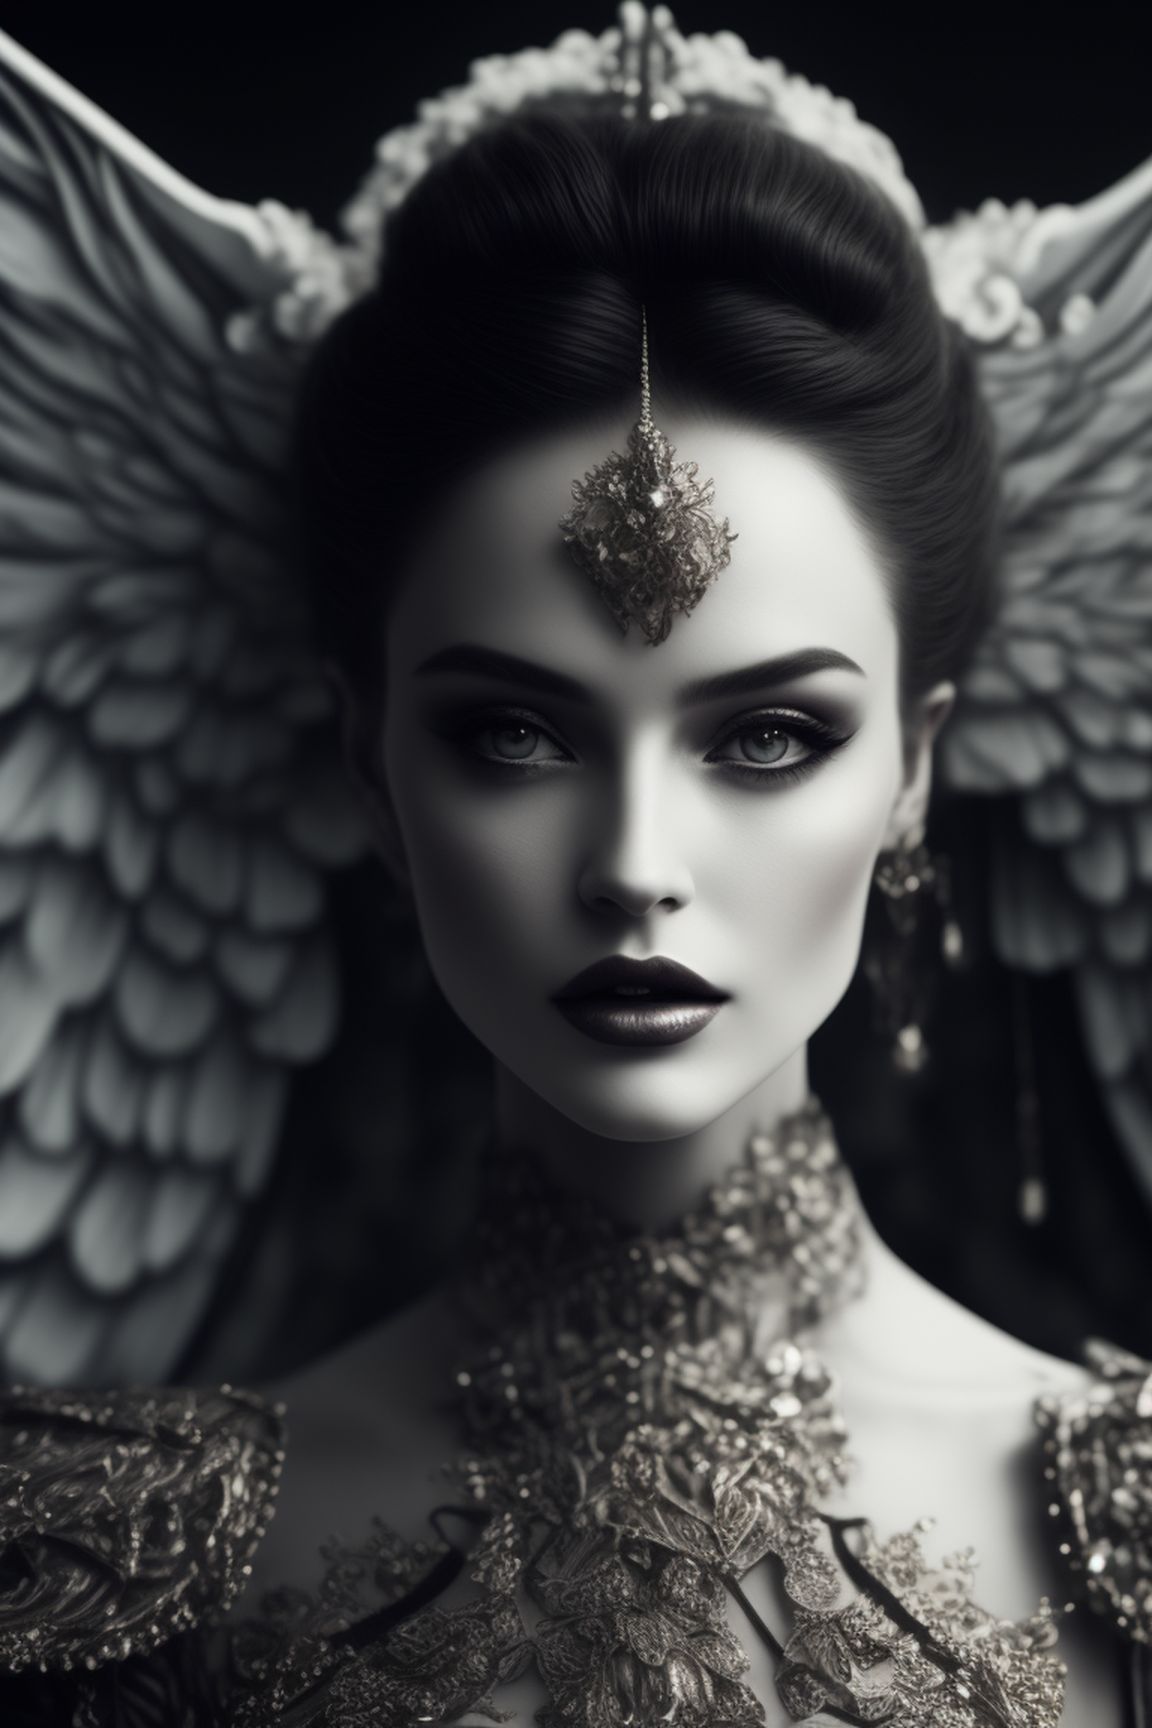 ErmMonz: beautiful woman as dark angel, intricate details, beautiful ...